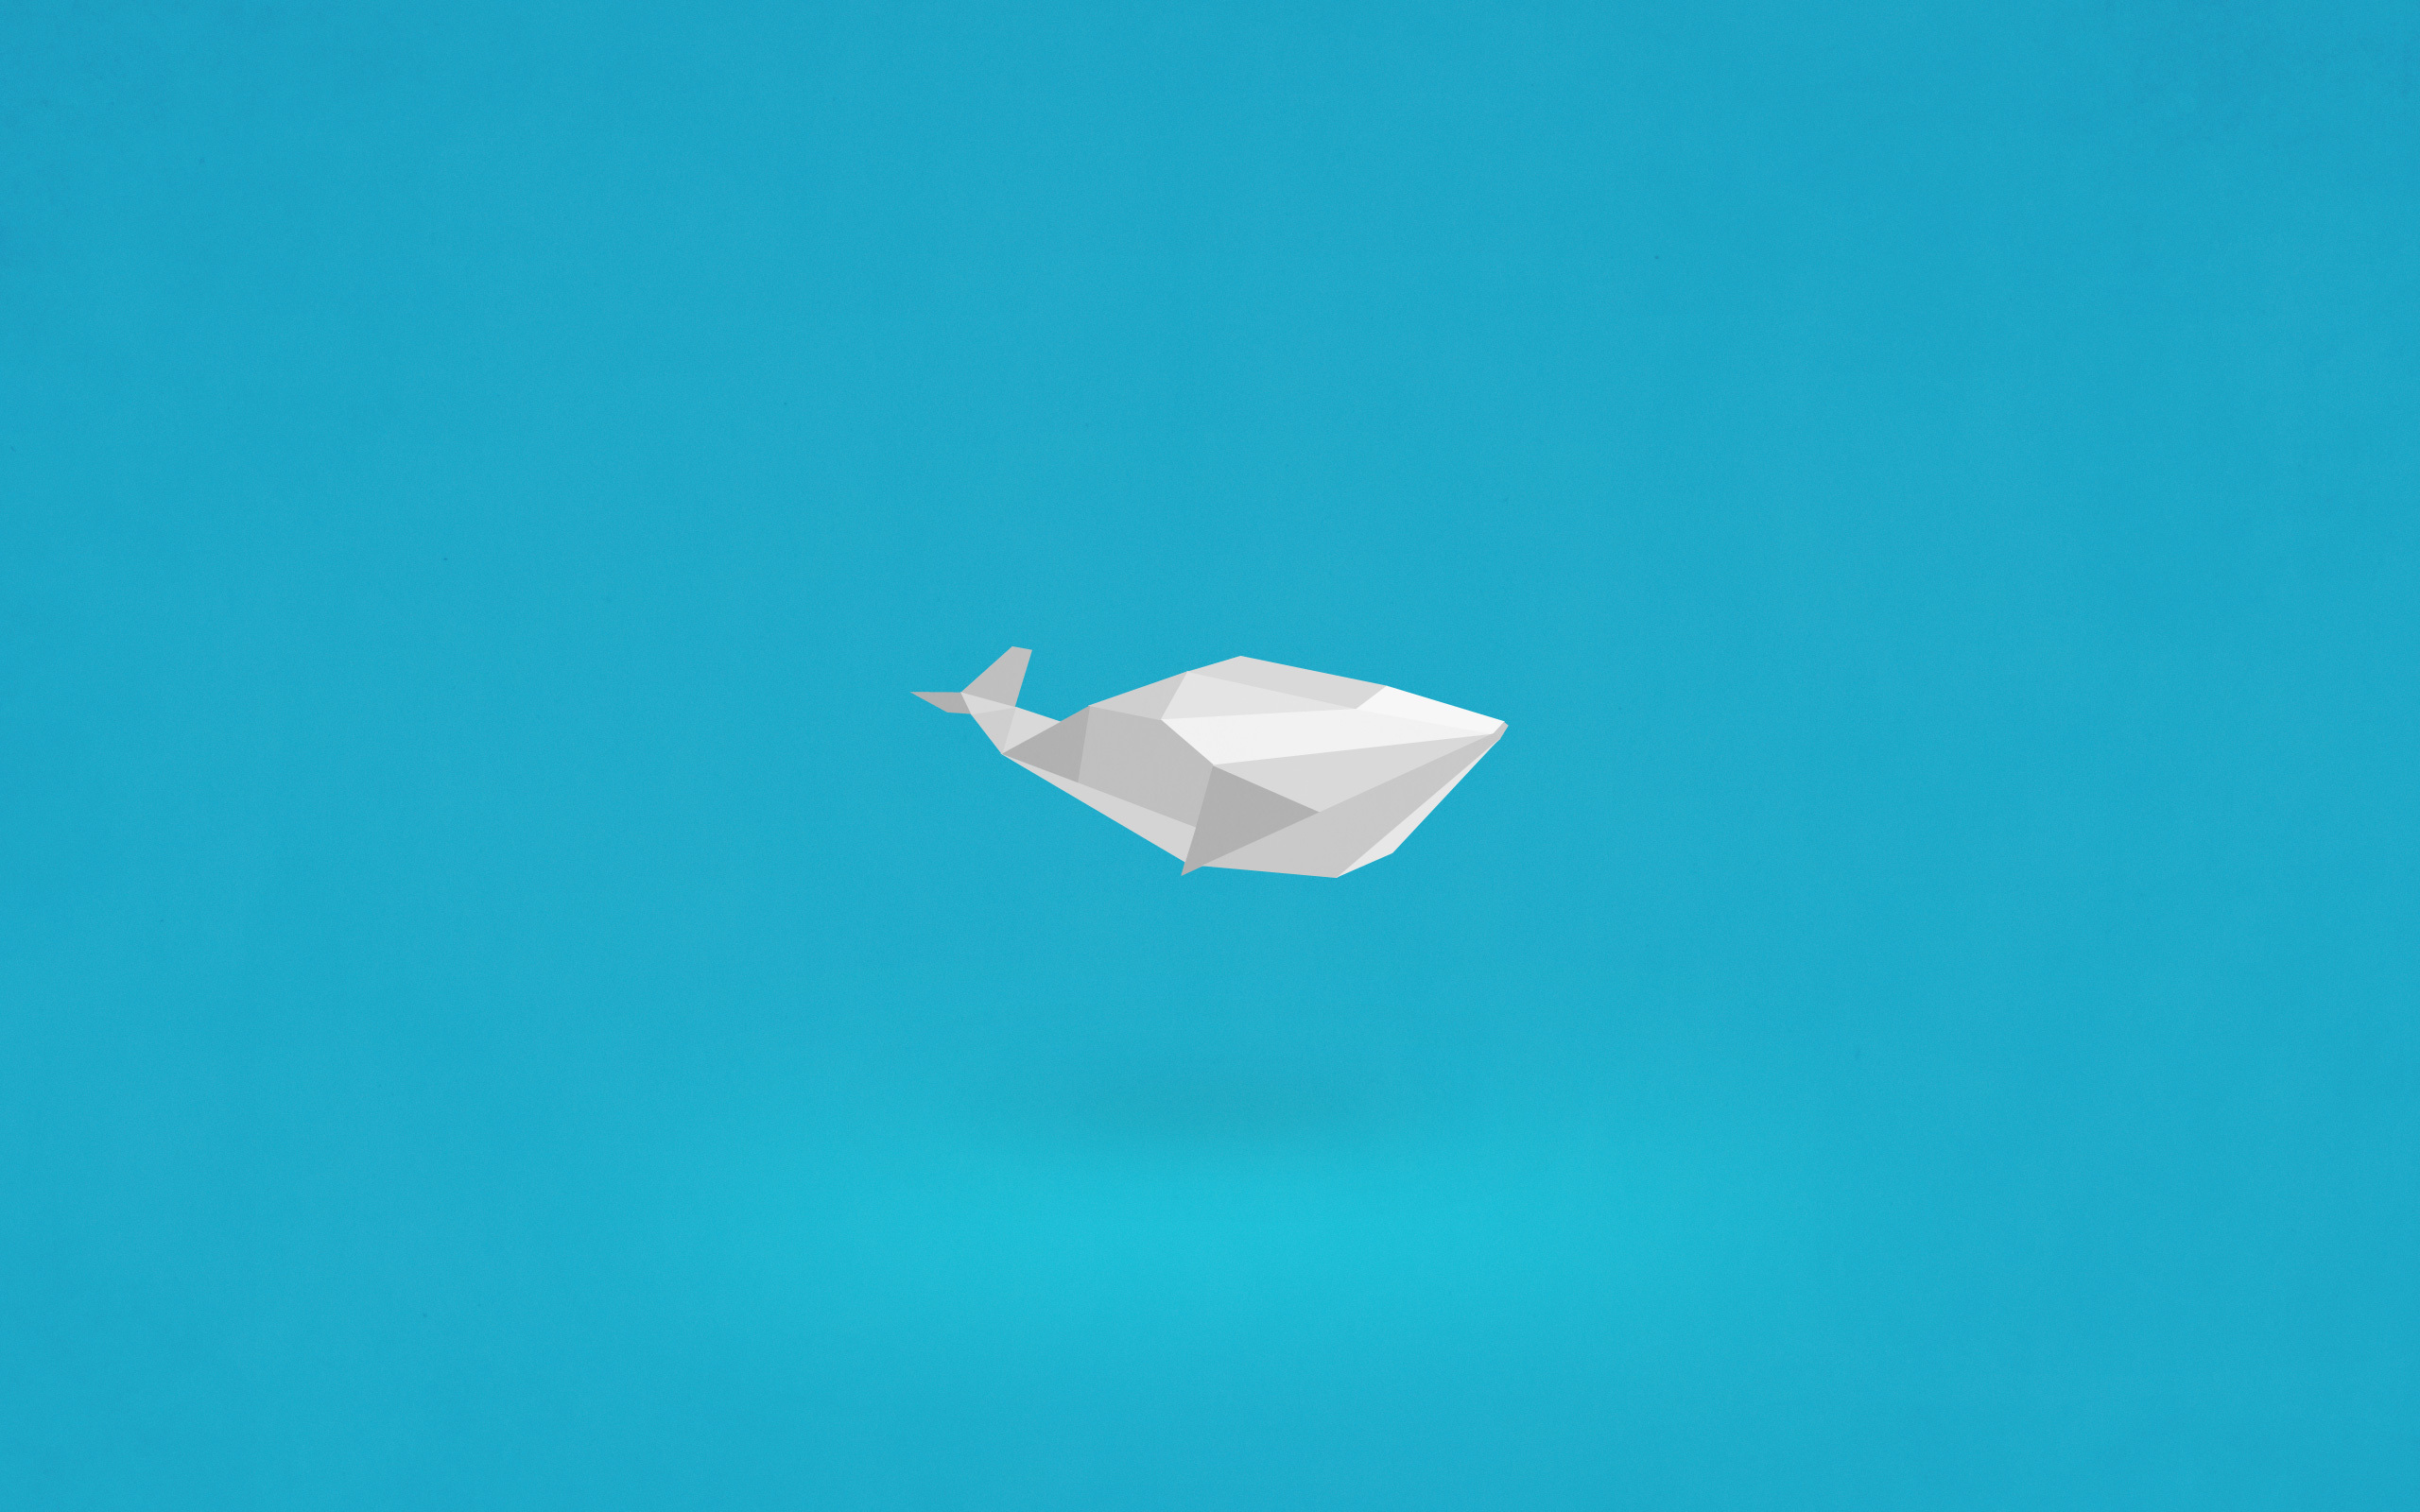 кит, оригами, бумага, минимализм, голубой фон, обои скачать бесплатно, Whale, origami, paper, minimalism, blue background, wallpaper free download